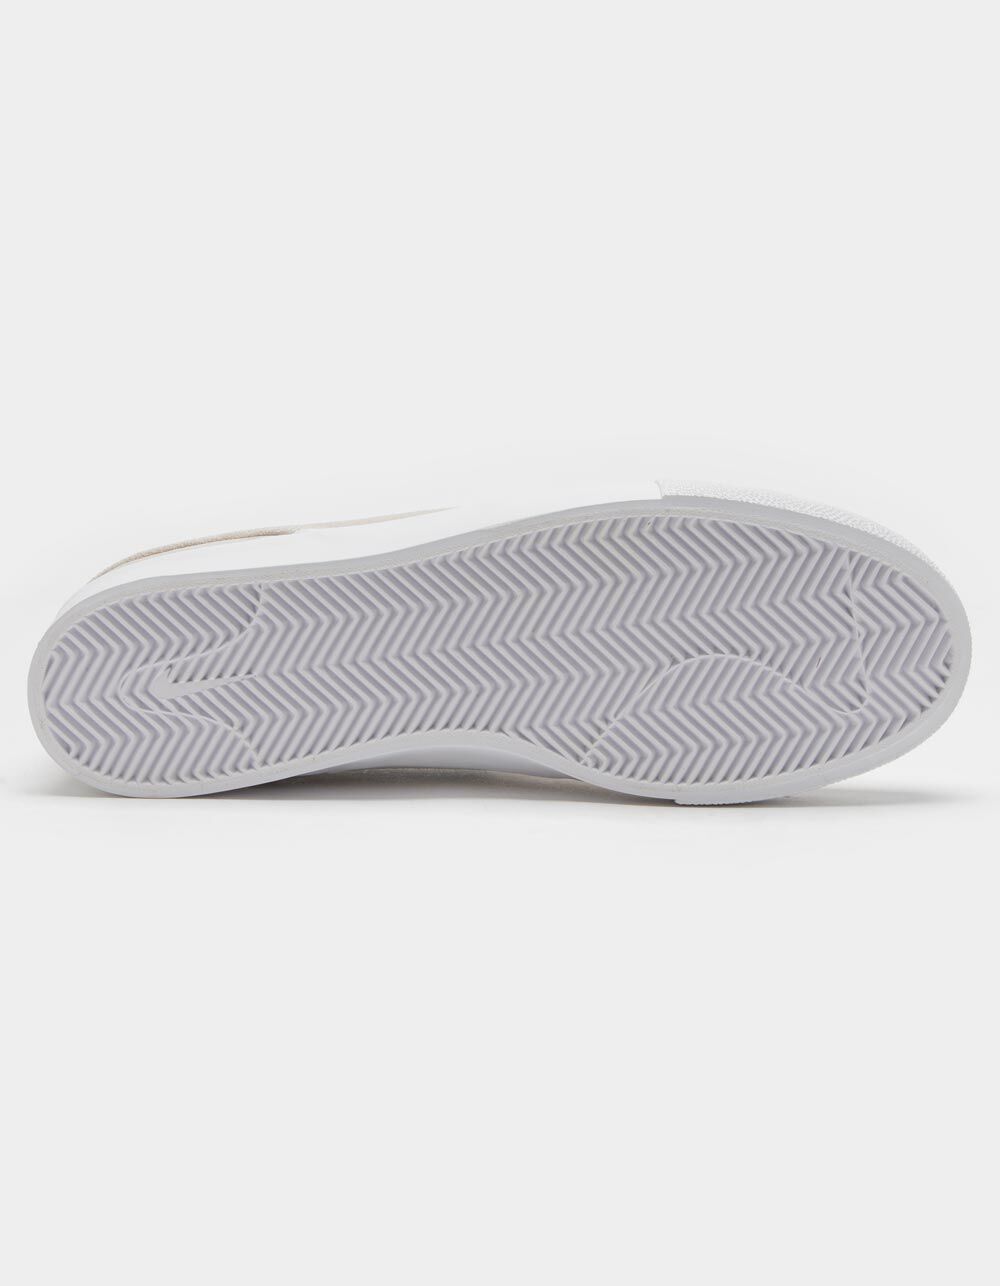 NIKE SB Zoom Stefan Janoski RM Shoes - OFF WHITE | Tillys